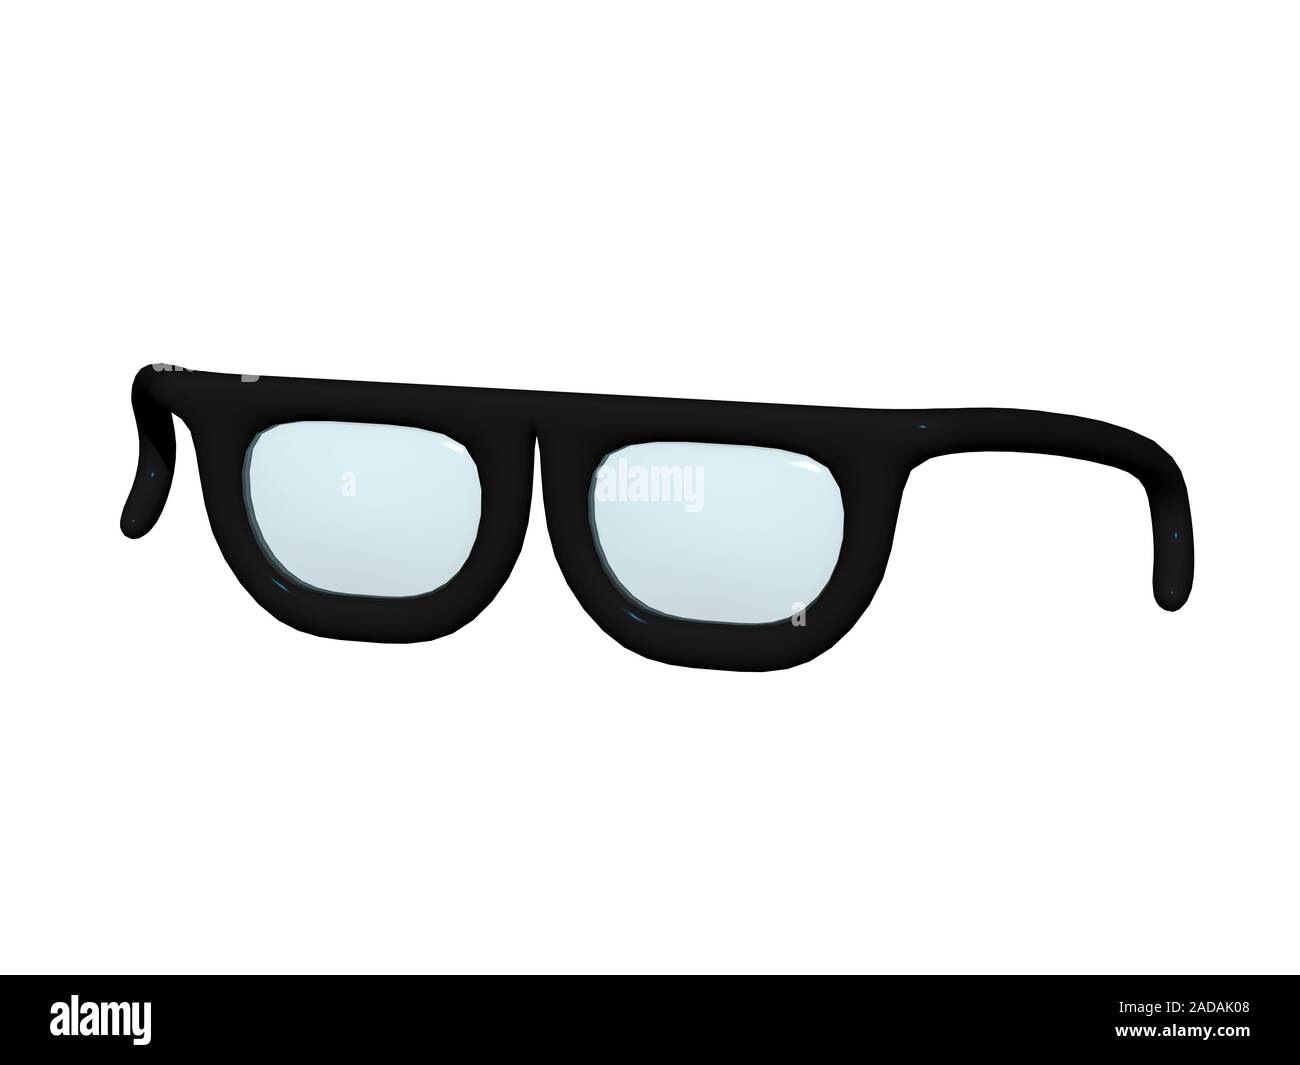 tinted black glasses Stock Photo - Alamy